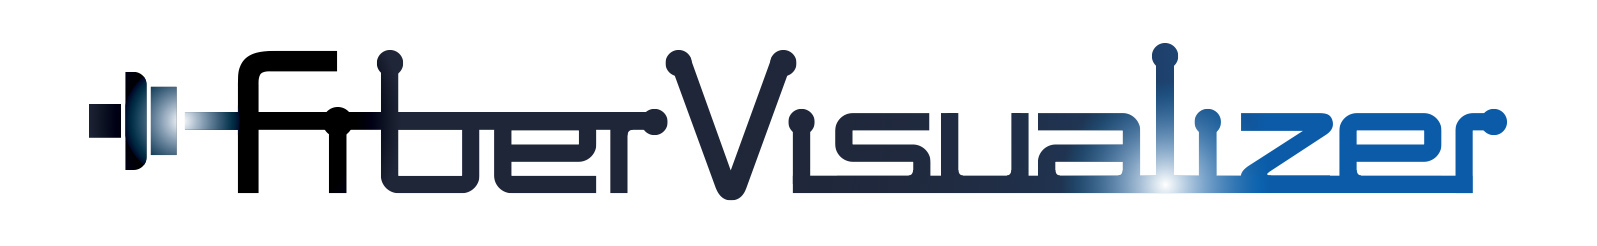 FiberVisualizer_logo.jpg